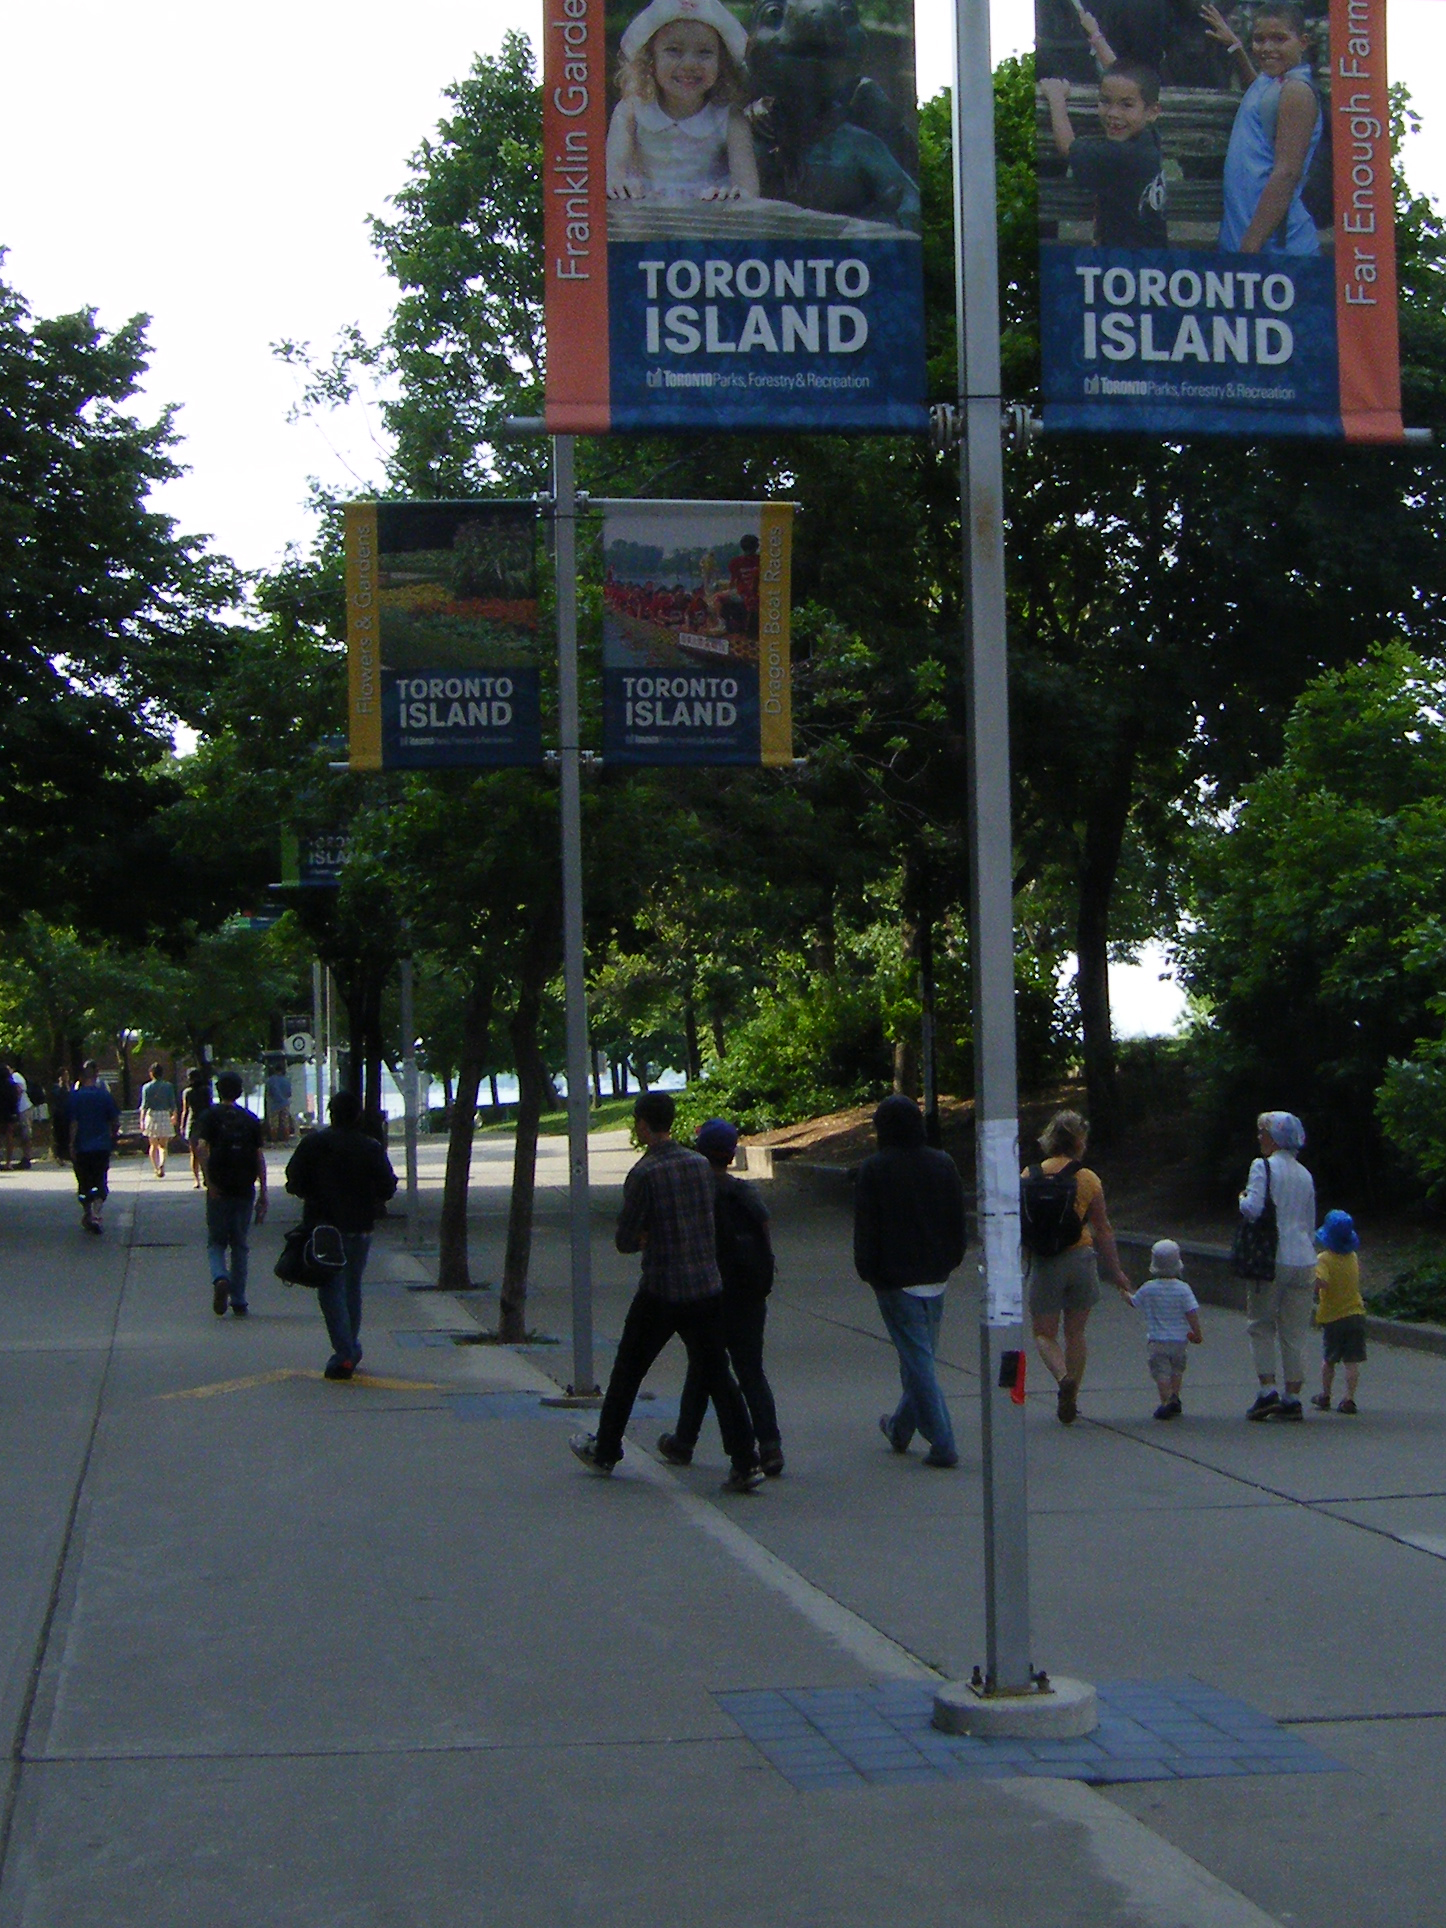 The Road to Toronto Island